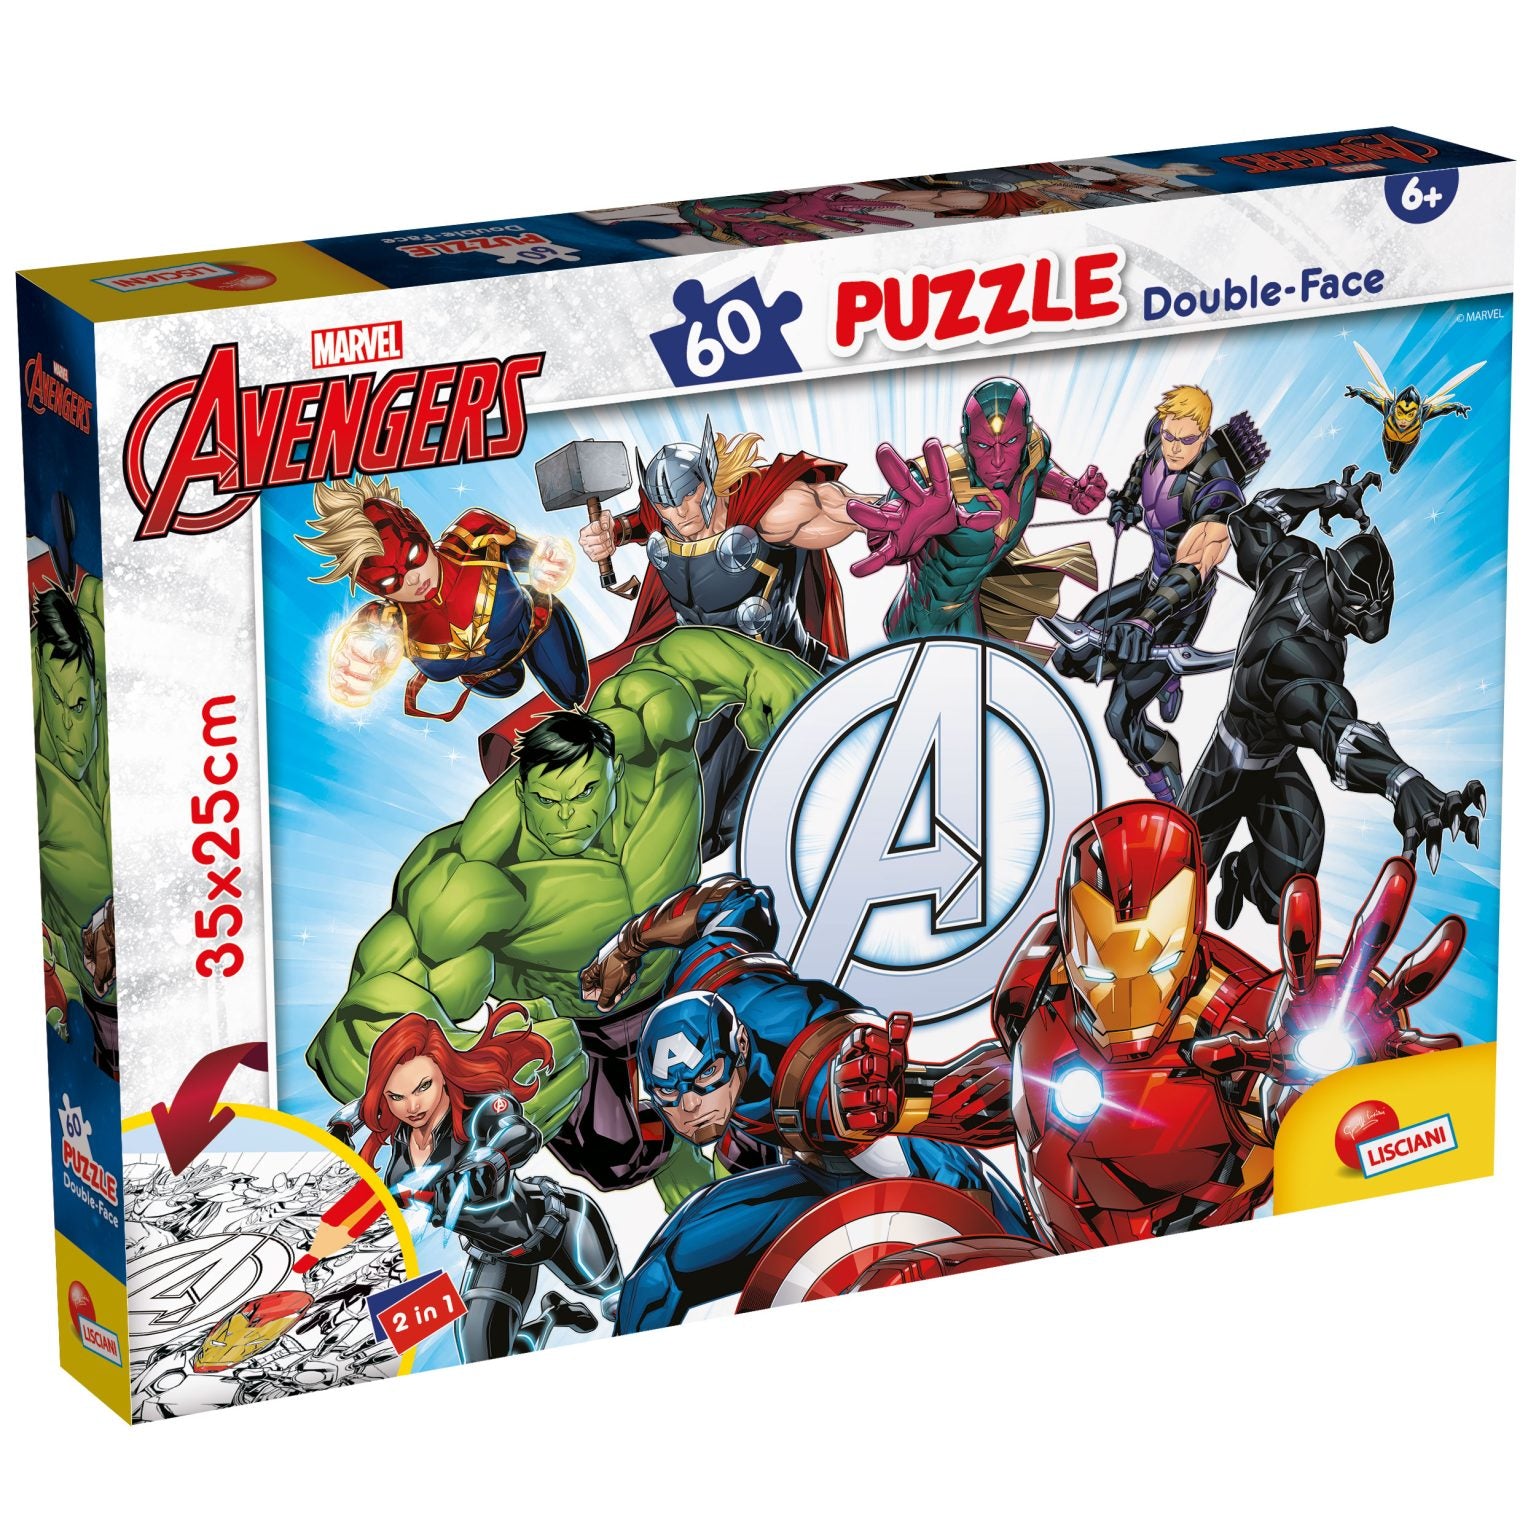 Puzzle Superhero 24 maxi, 1 - 39 pieces